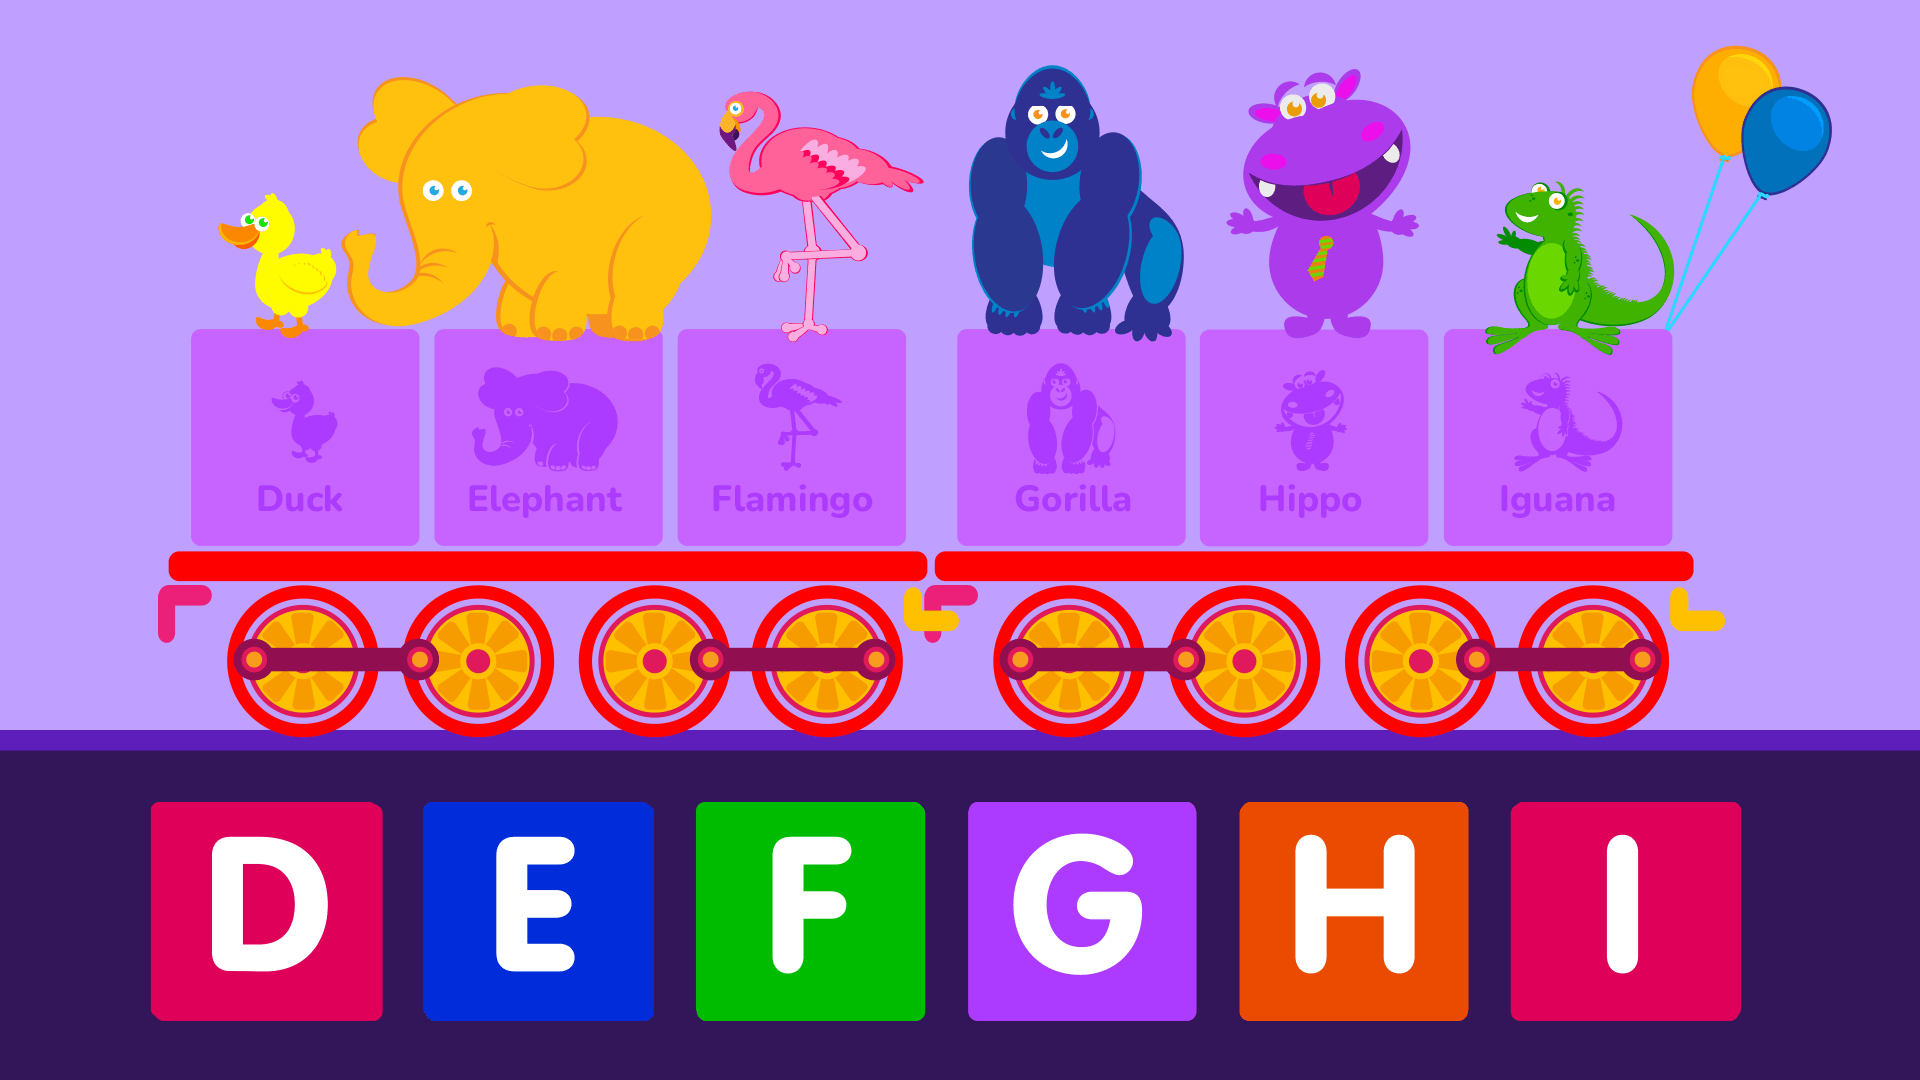 The Alphabet Train game DEFGH